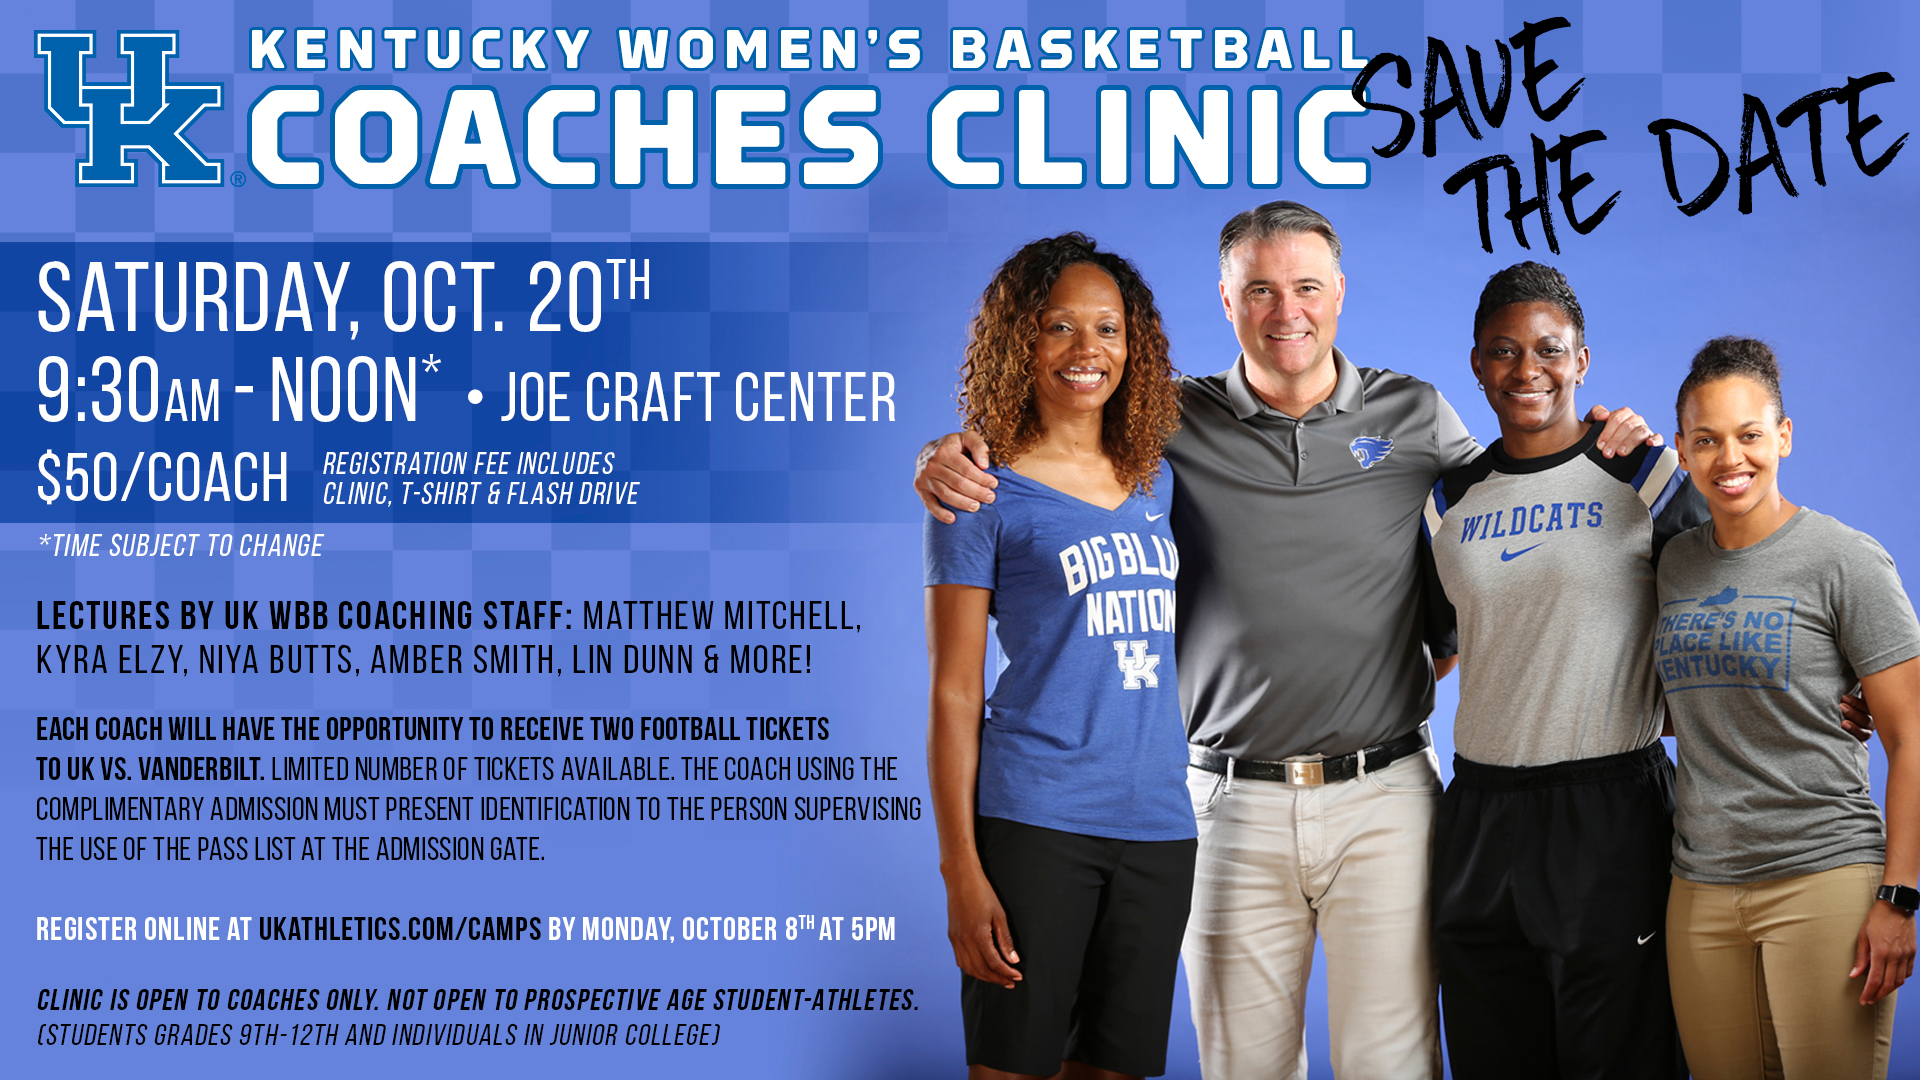 2018 Kentucky Women's Basketball Coaches Clinic